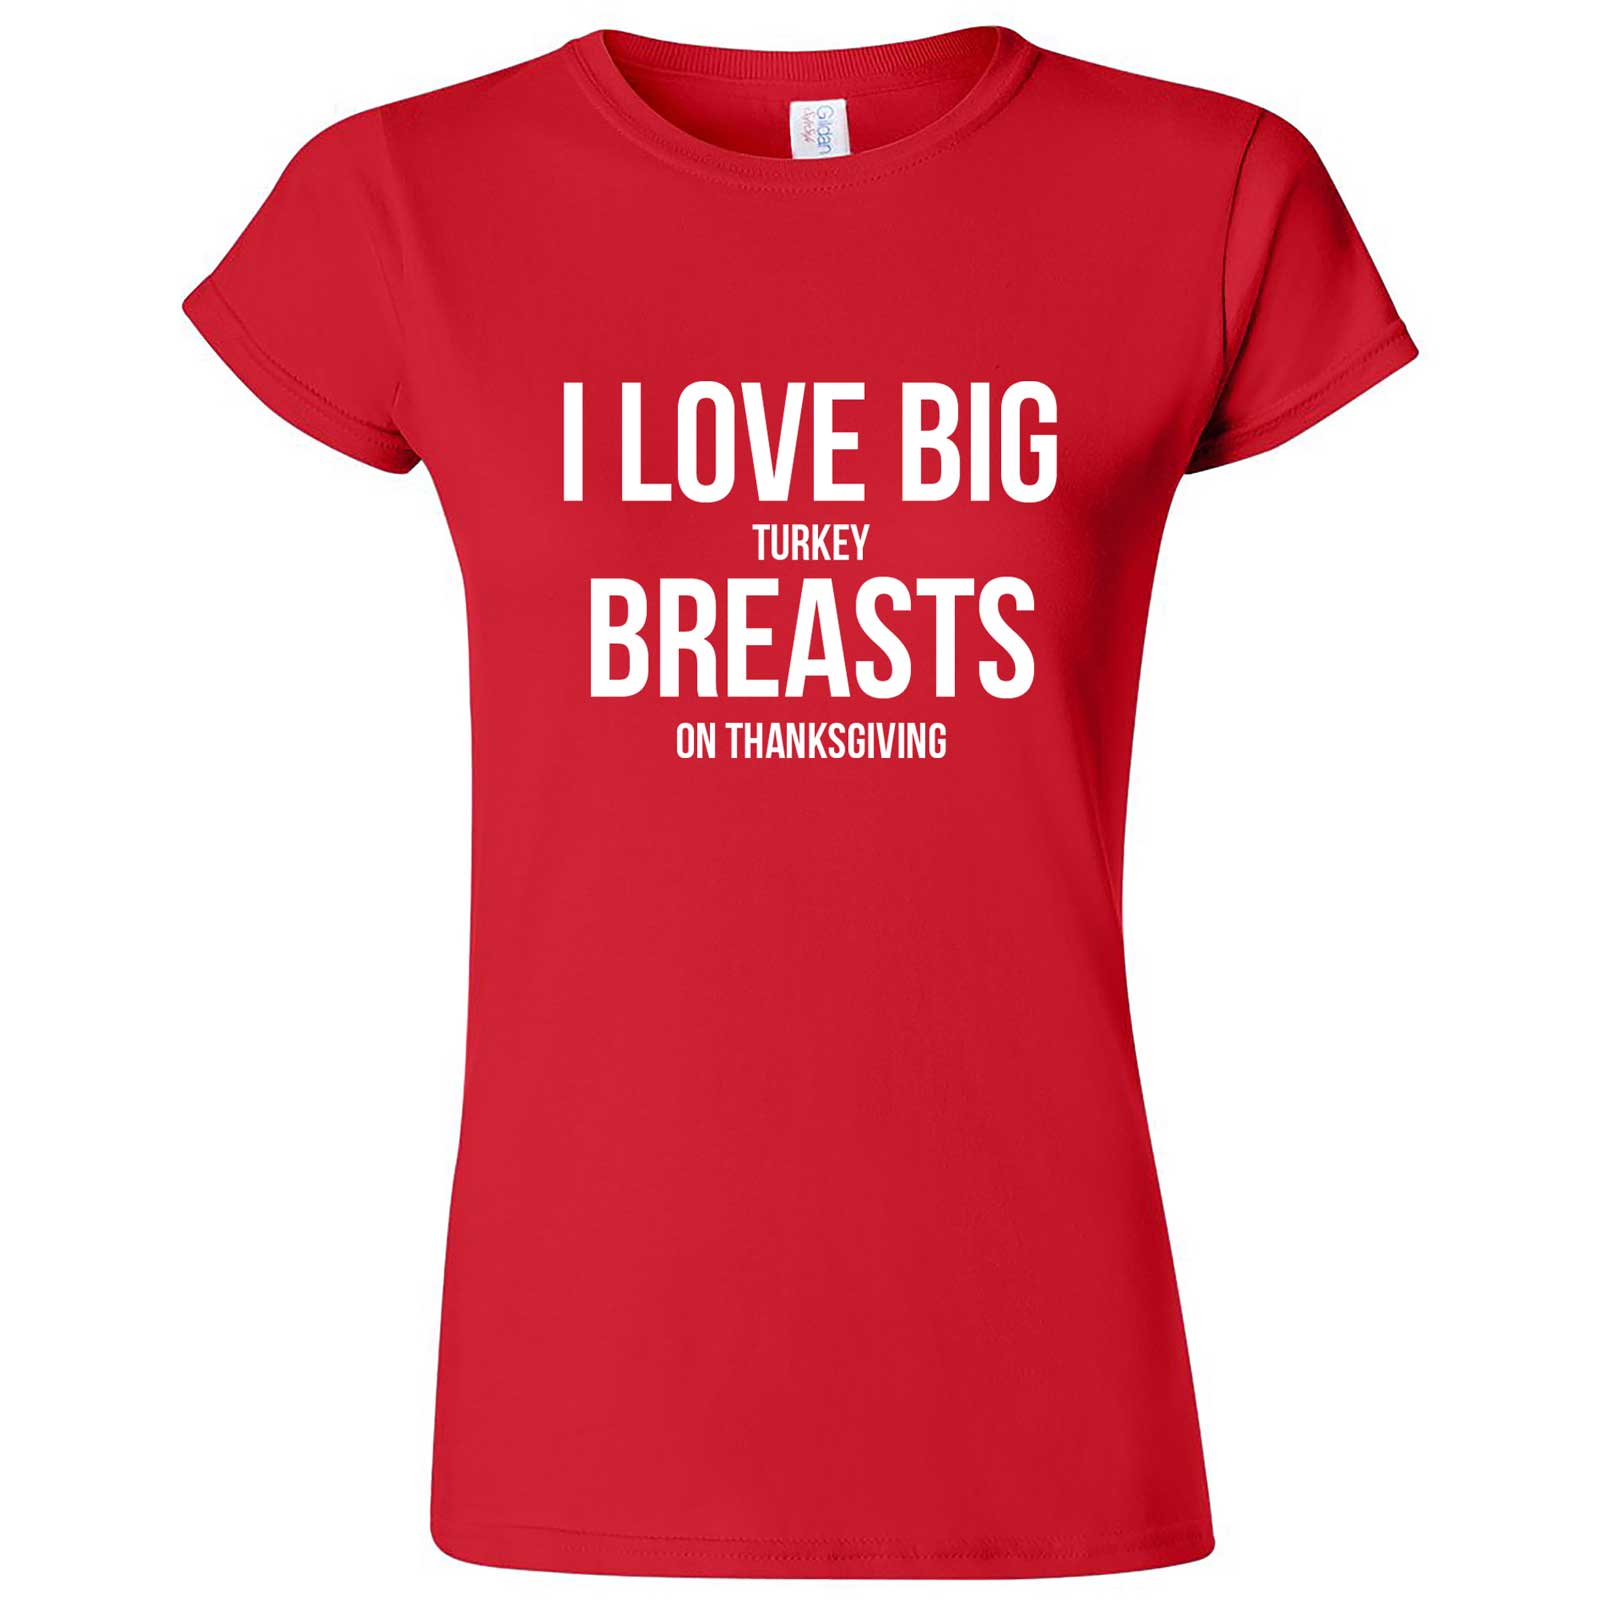 I Love Big Turkey Breasts on Thanksgiving women's t-shirt Black